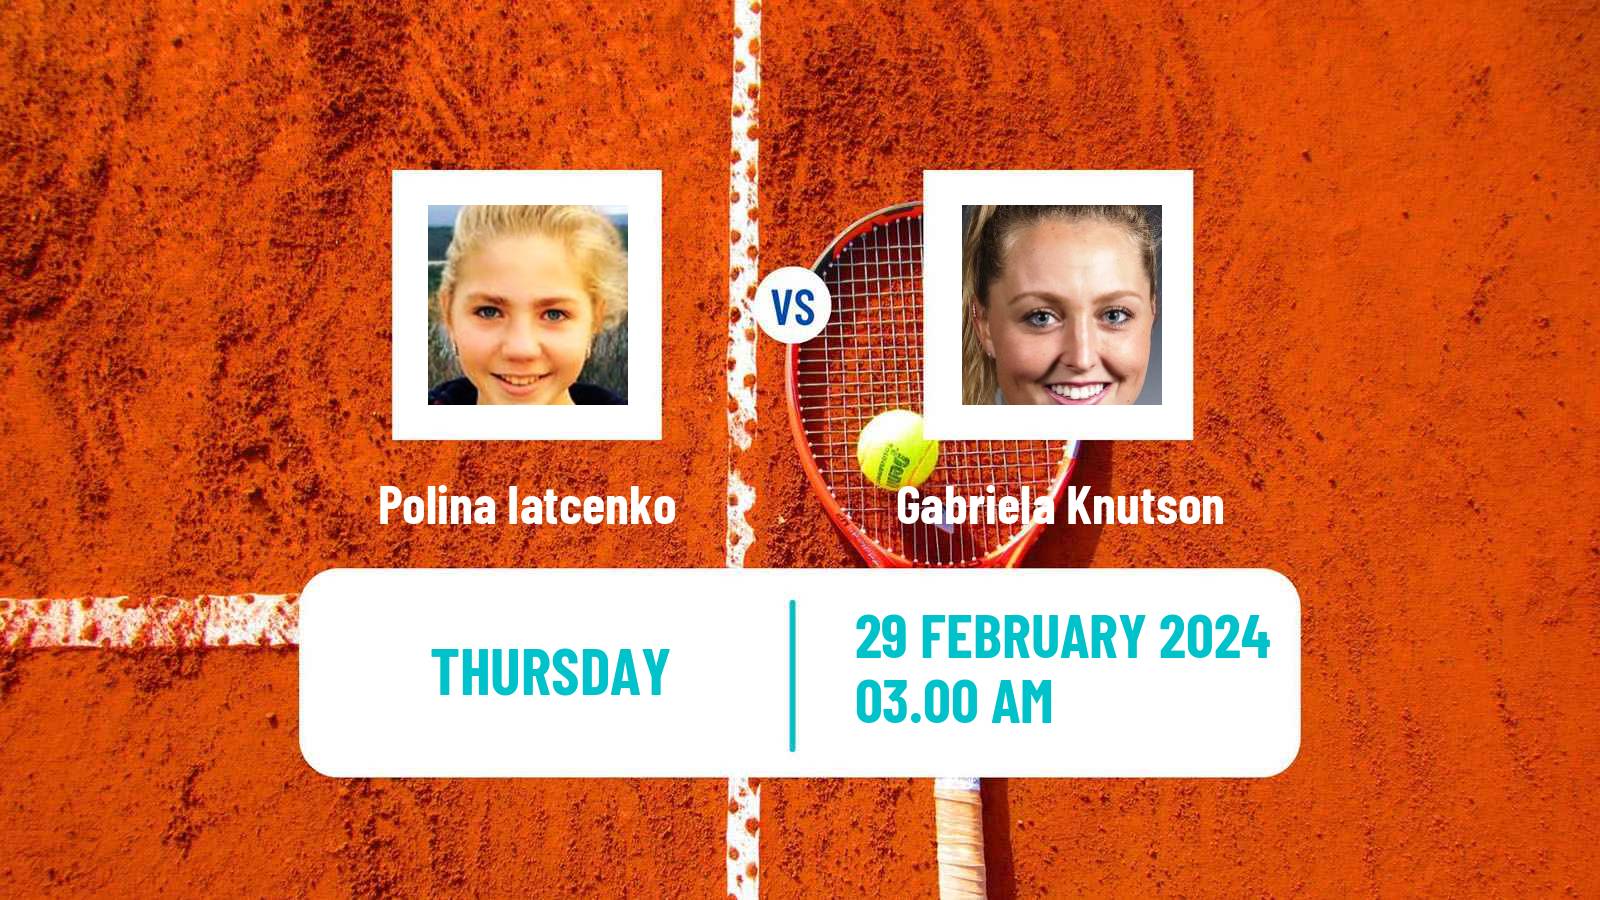 Tennis ITF W50 Pretoria 2 Women Polina Iatcenko - Gabriela Knutson